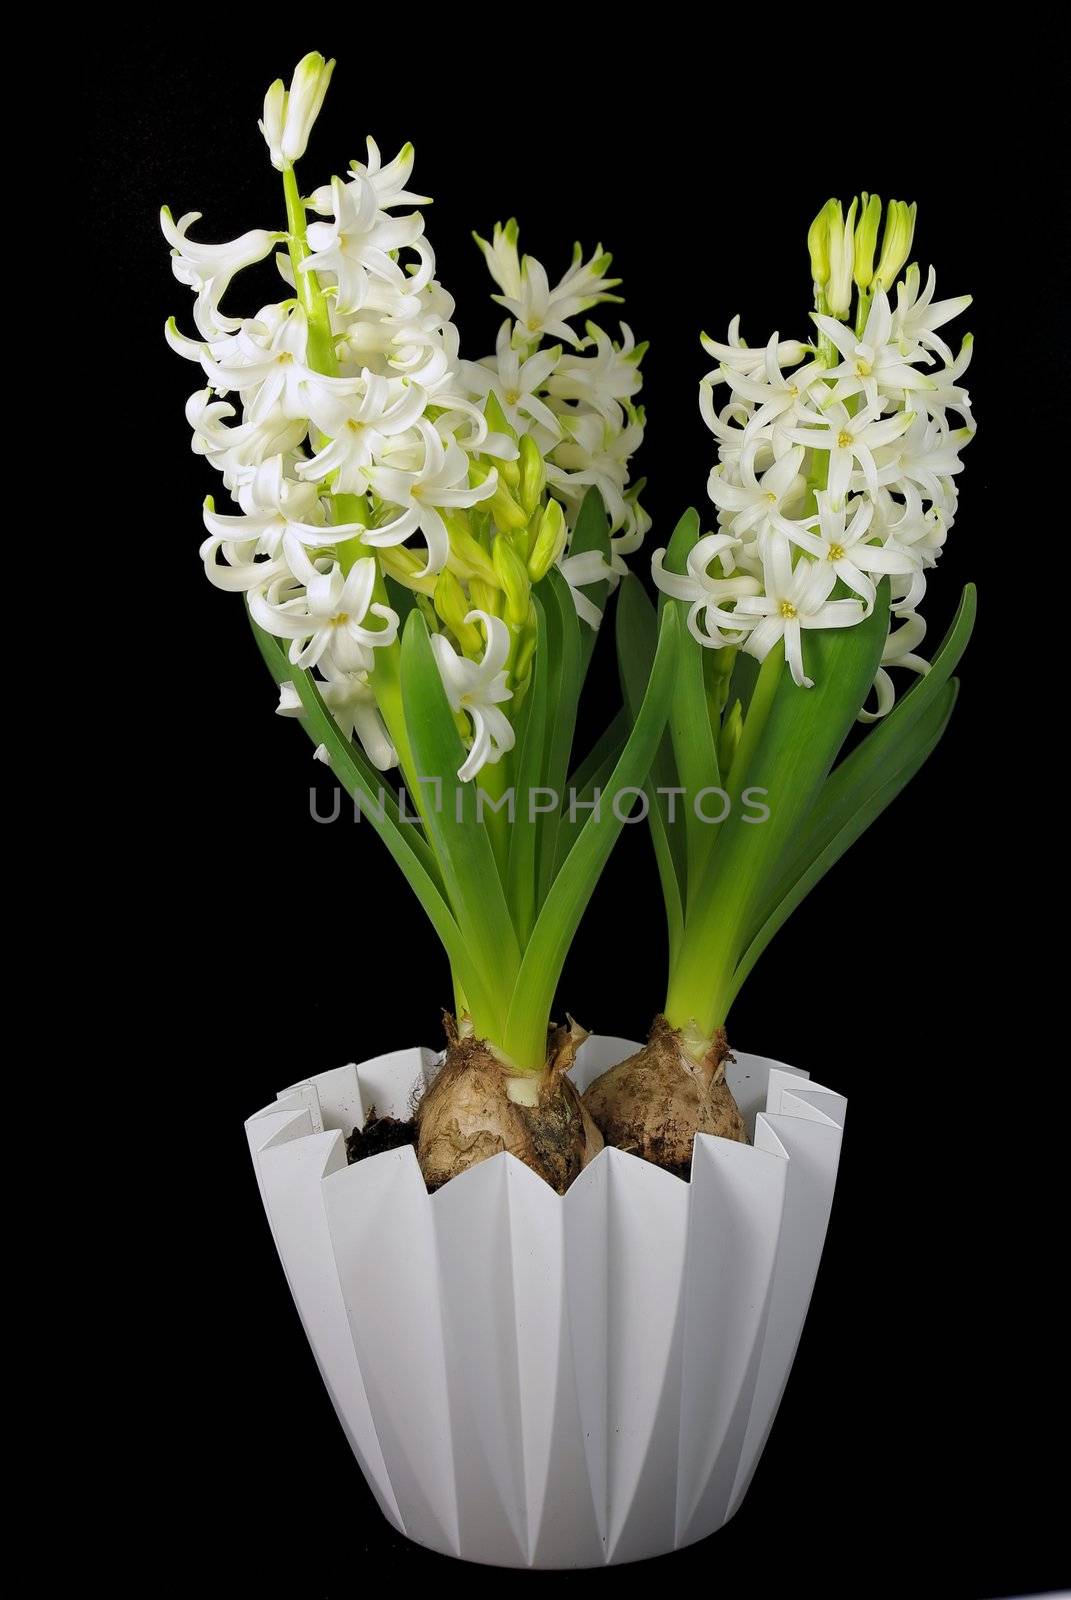 White hyacinth flowers by Vitamin